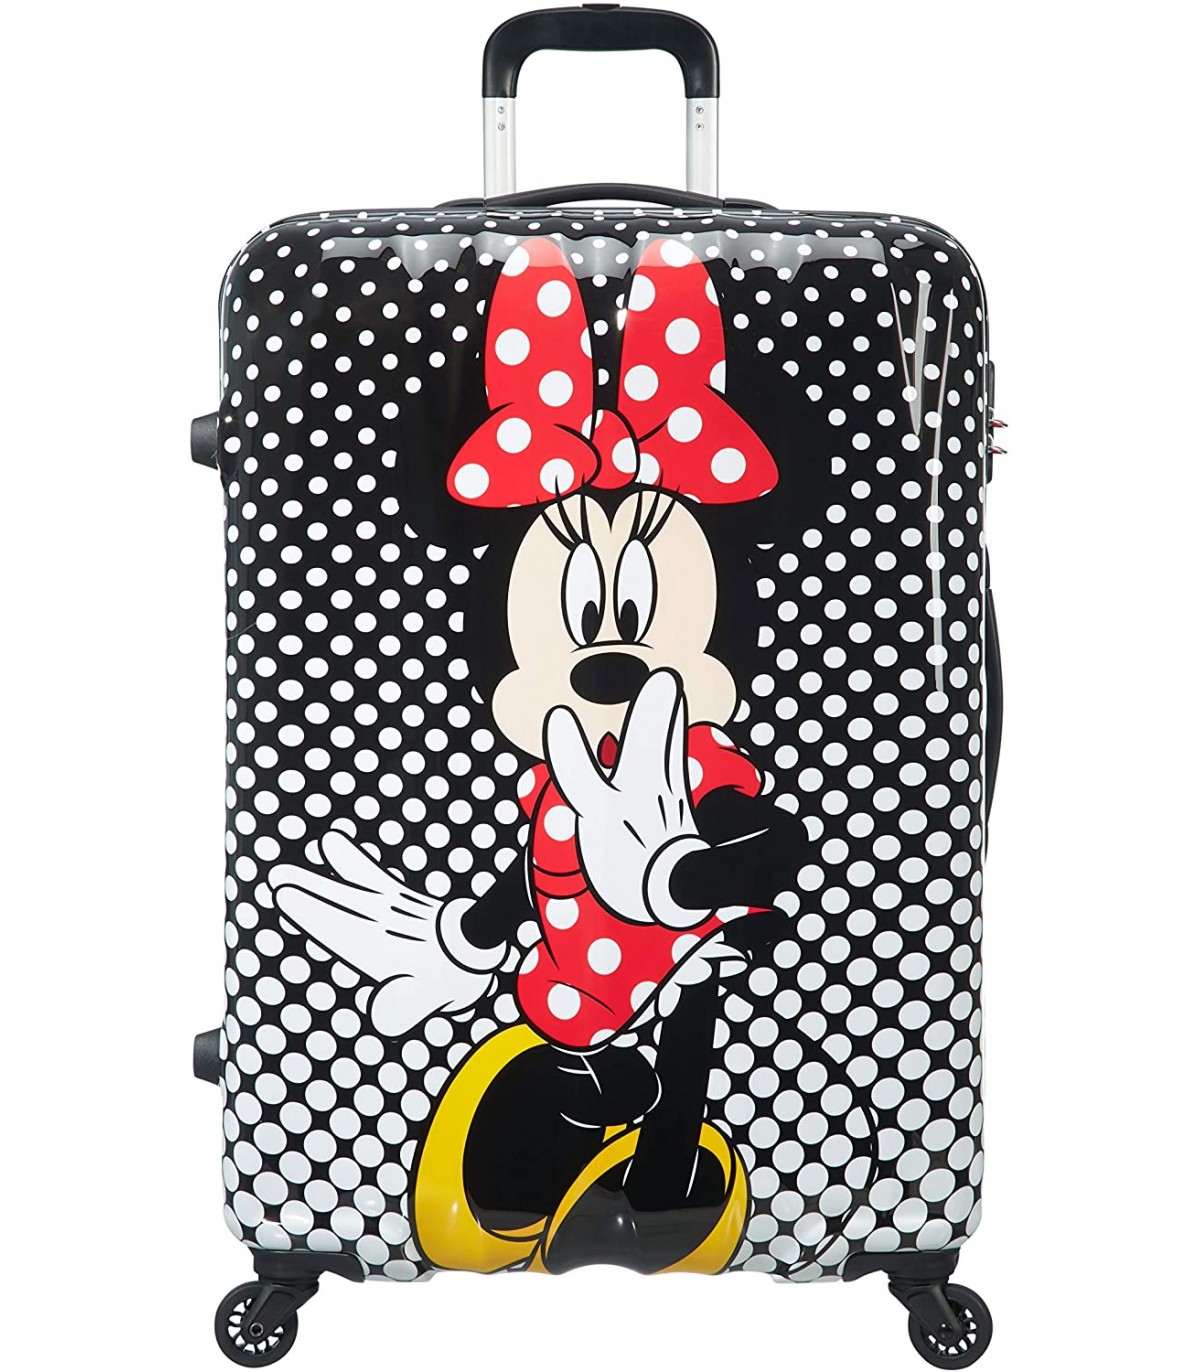 Maleta Minnie Mouse Polka Dot (4 Magic Disney